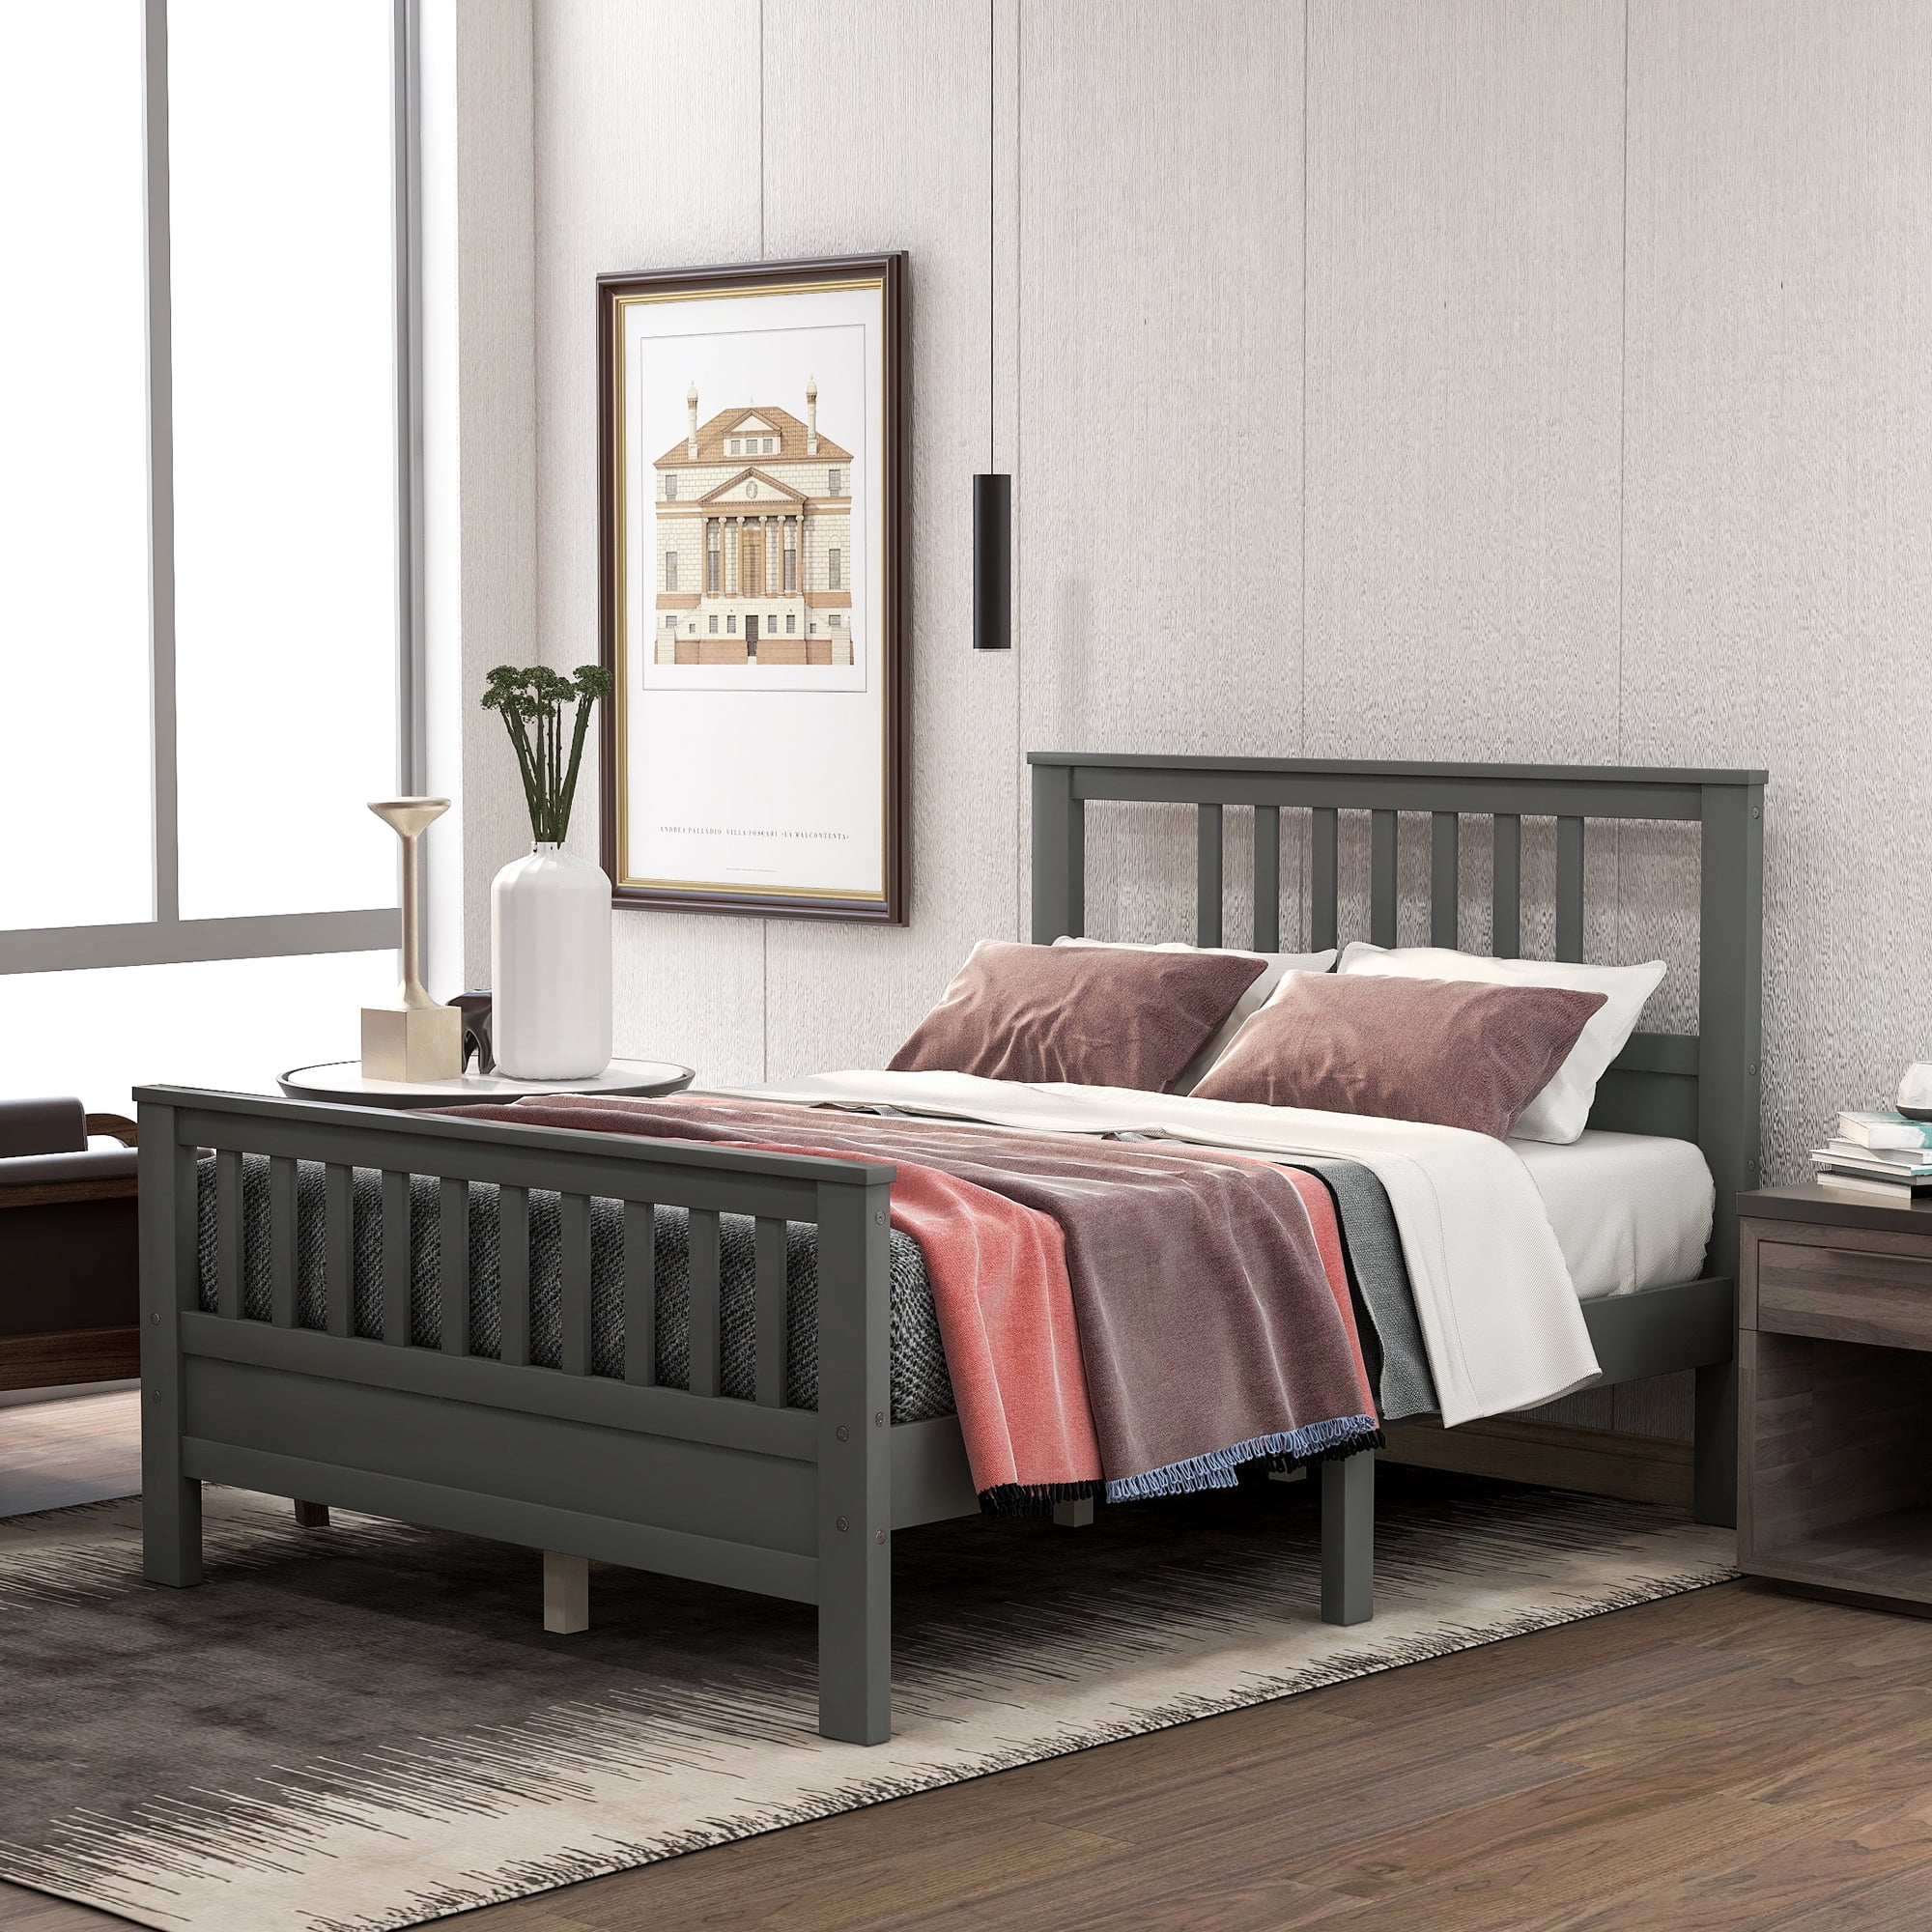 Euroco Wood Platform Bed With Headboard, Full Size Wooden Platform Bed Frame